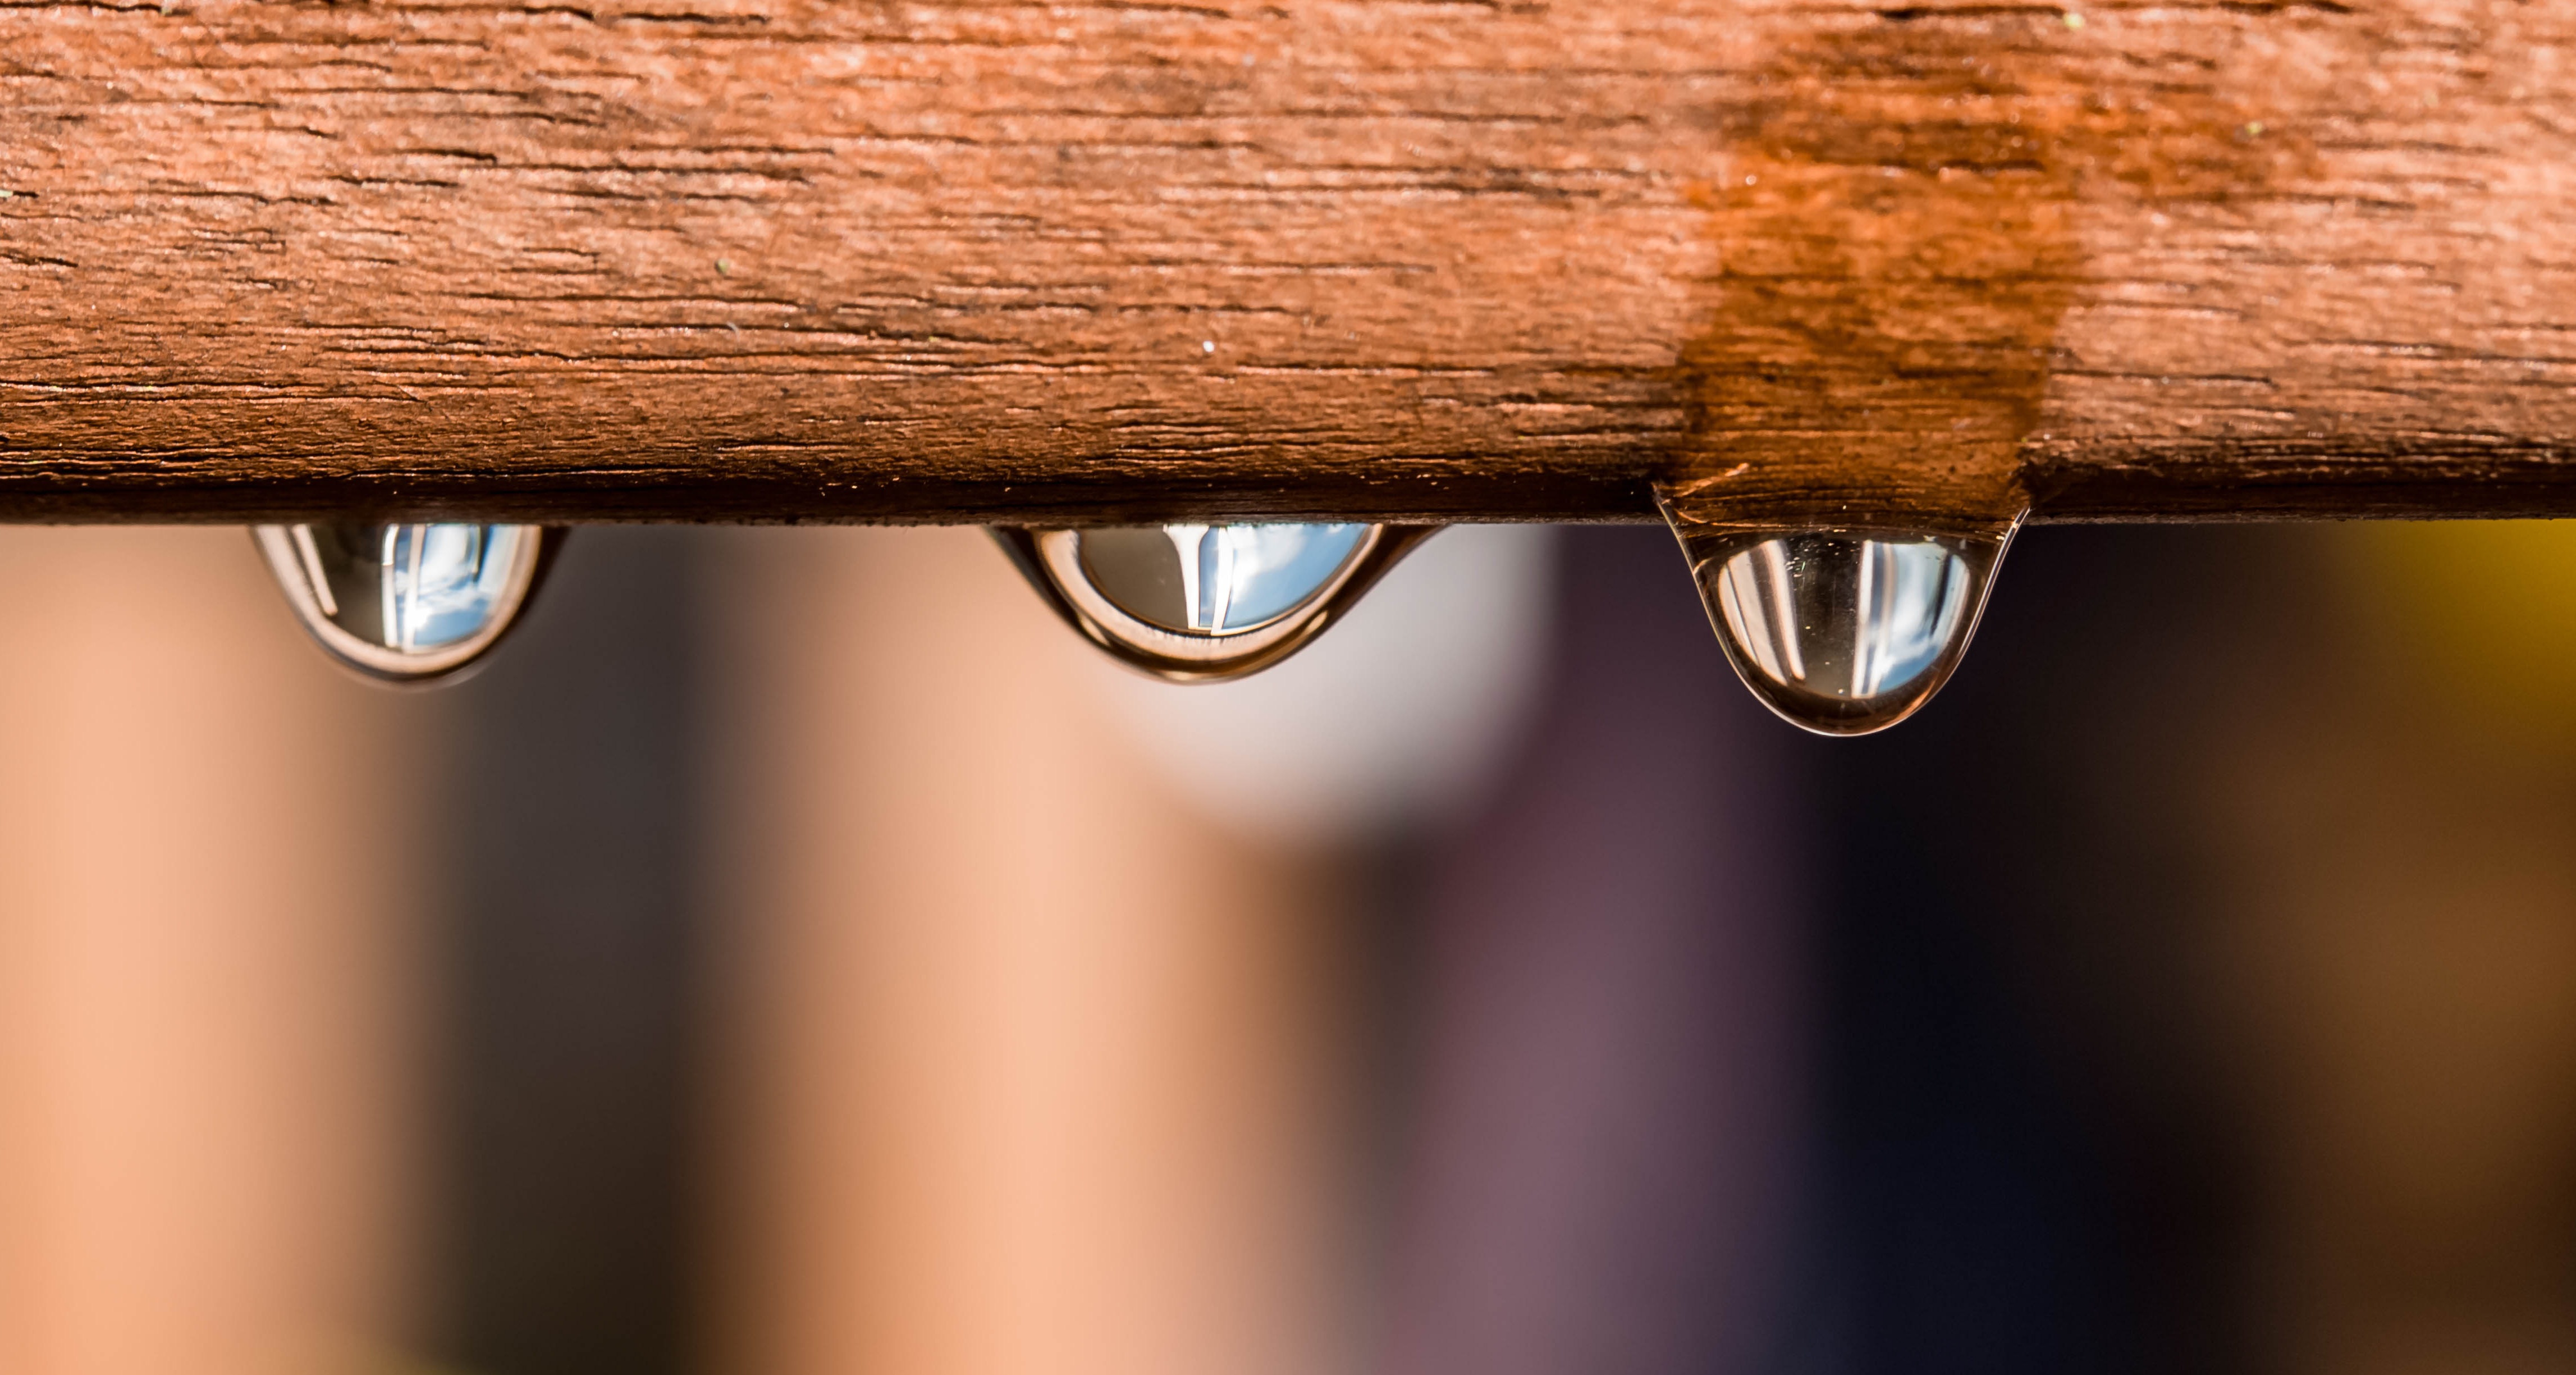 Photo ideas: Water drops